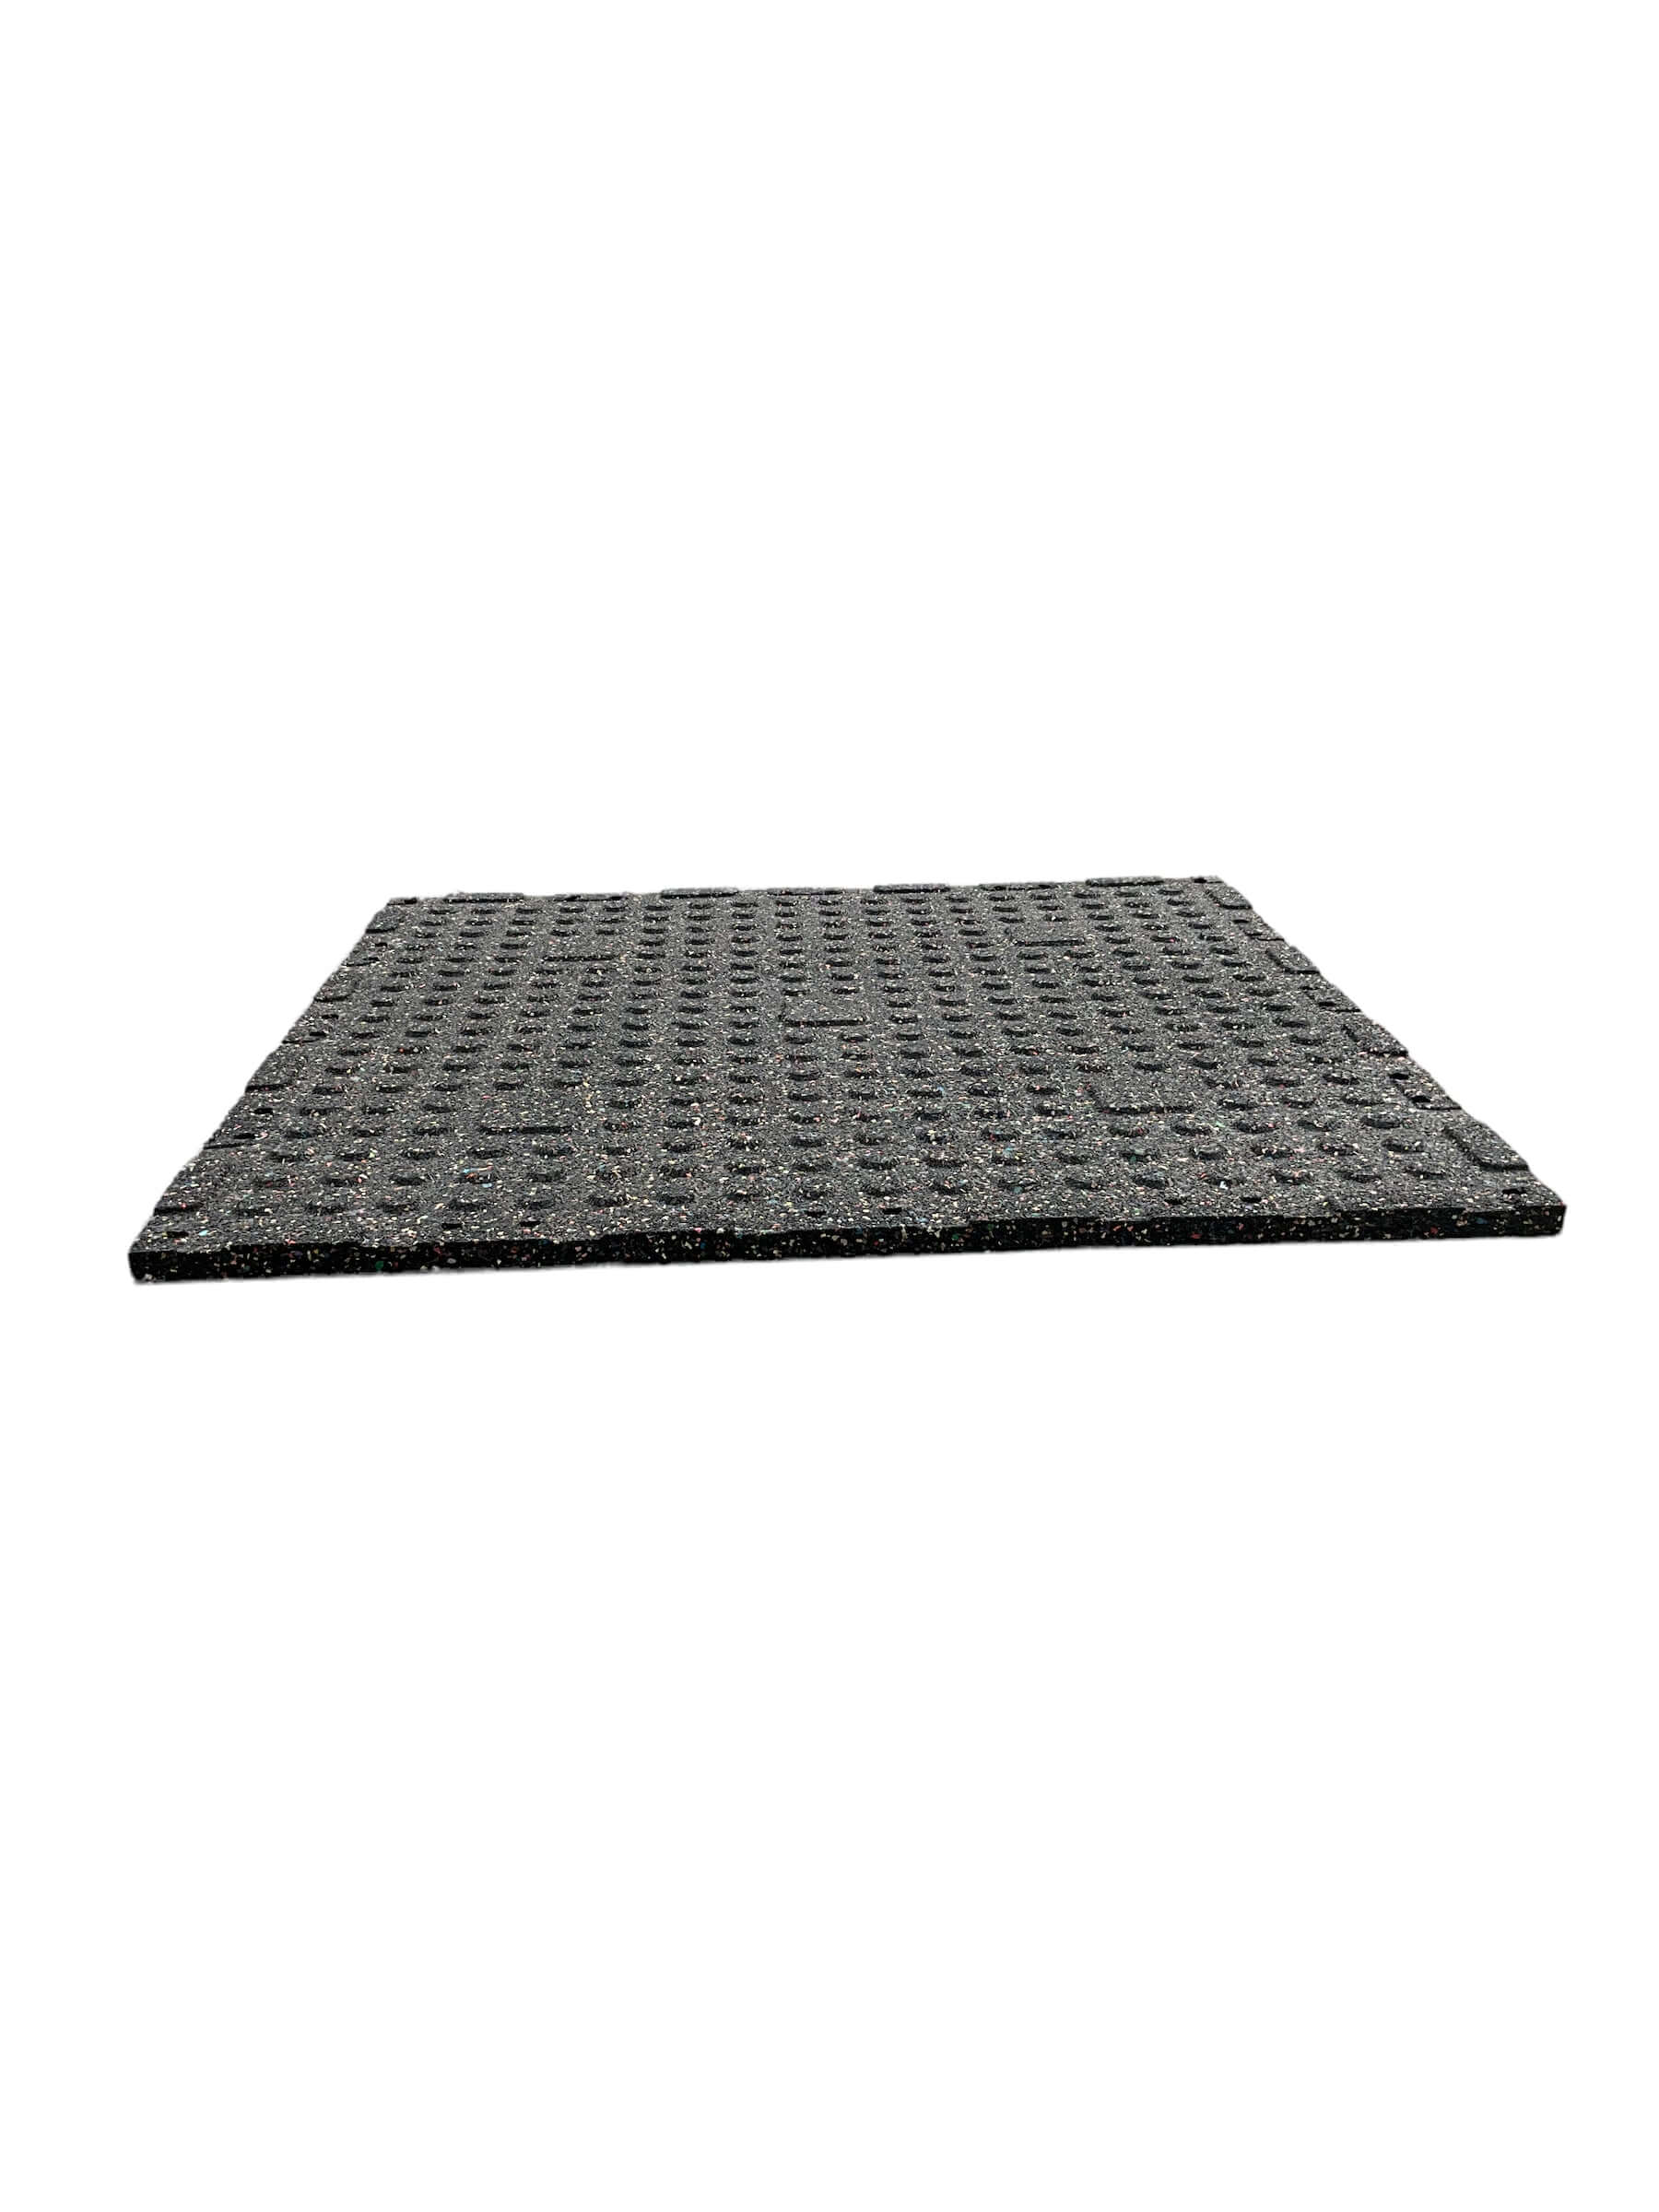 Pack of 3 - 20mm Rubber Gym Flooring Dual Density EPDM Rubber Dense Tile Mat 1m x 1m 1m x 1m BLACK | INSOURCE